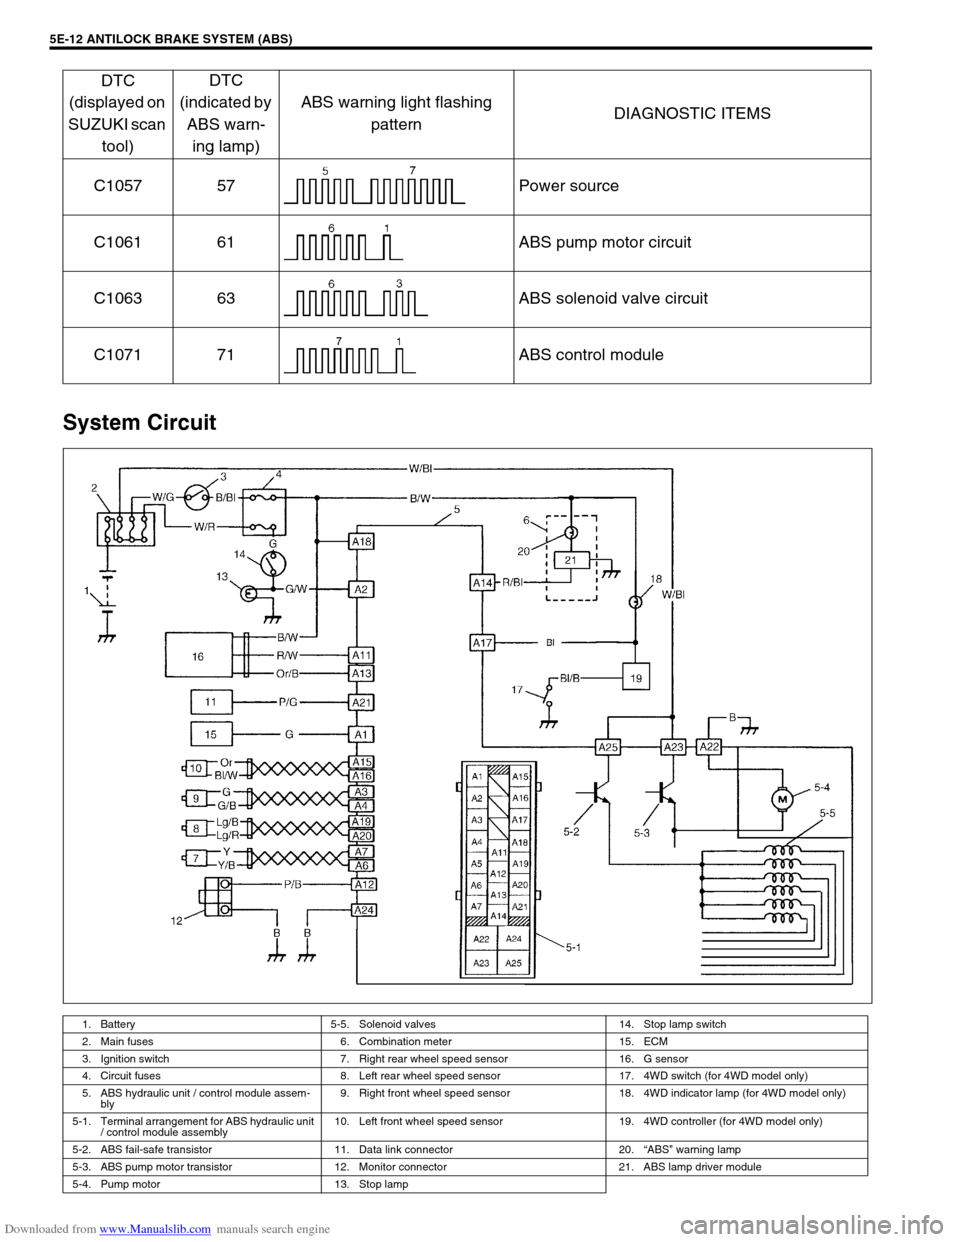 SUZUKI JIMNY 2005 3.G Service Workshop Manual Downloaded from www.Manualslib.com manuals search engine 5E-12 ANTILOCK BRAKE SYSTEM (ABS)
System Circuit
C1057 57 Power source
C1061 61 ABS pump motor circuit
C1063 63 ABS solenoid valve circuit
C107